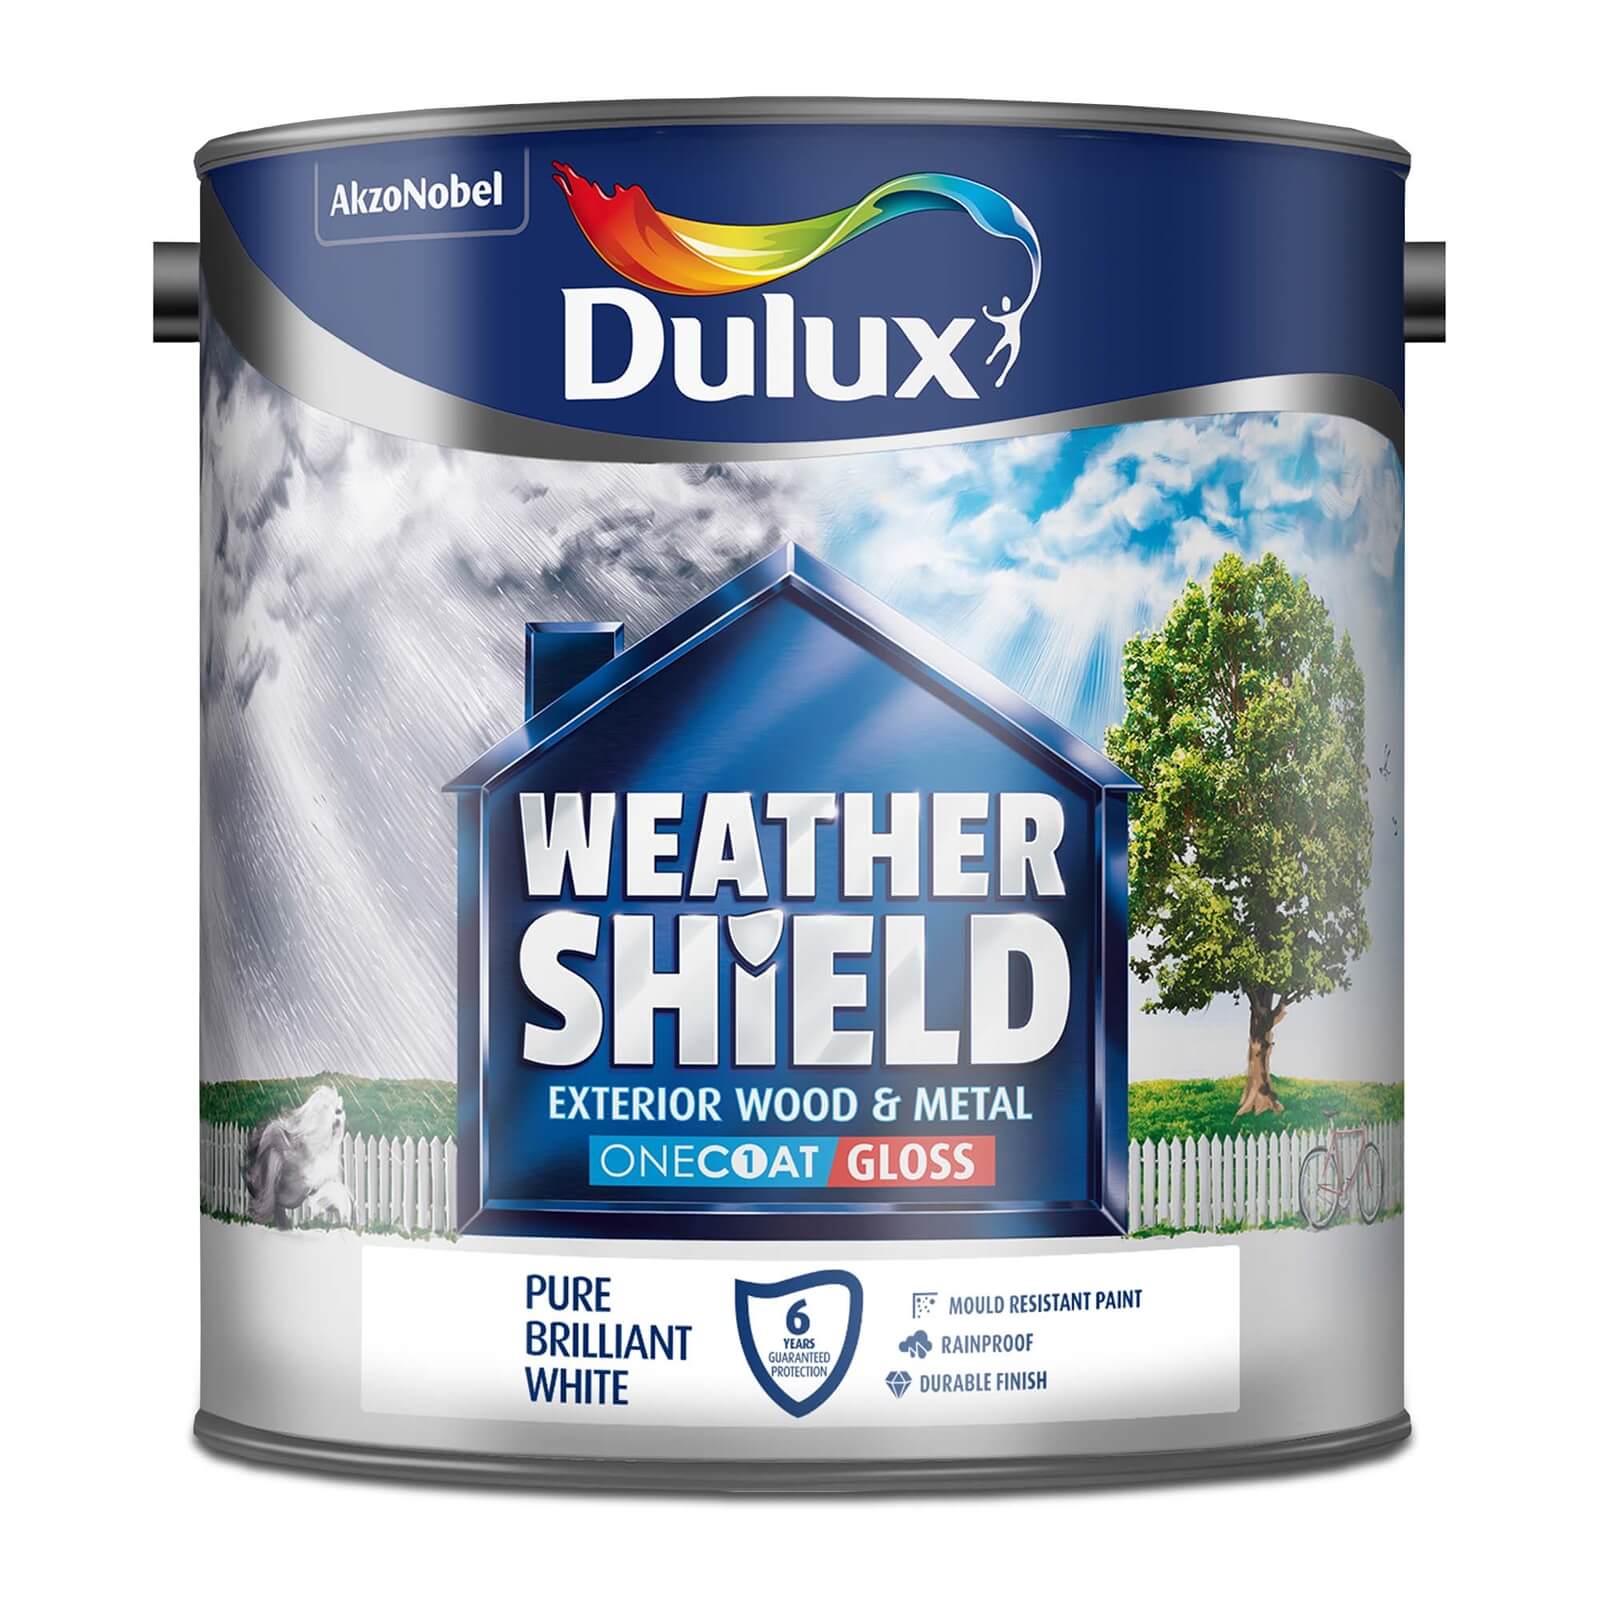 Dulux Weathershield Exterior One Coat Gloss Paint Pure Brilliant White - 2.5L